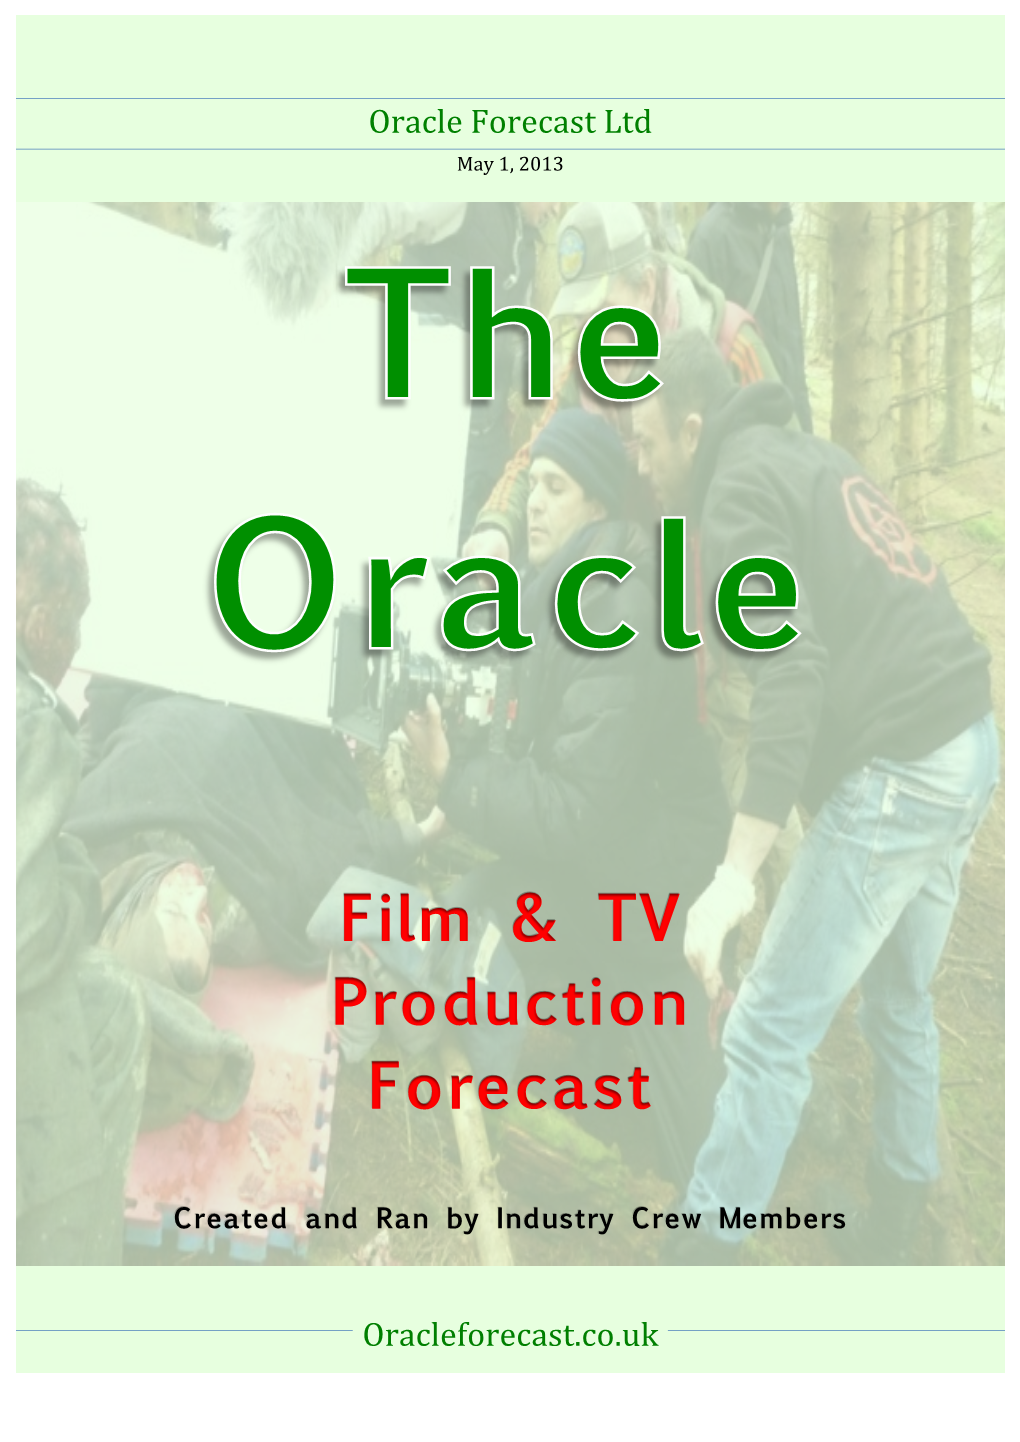 Film & TV Production Forecast